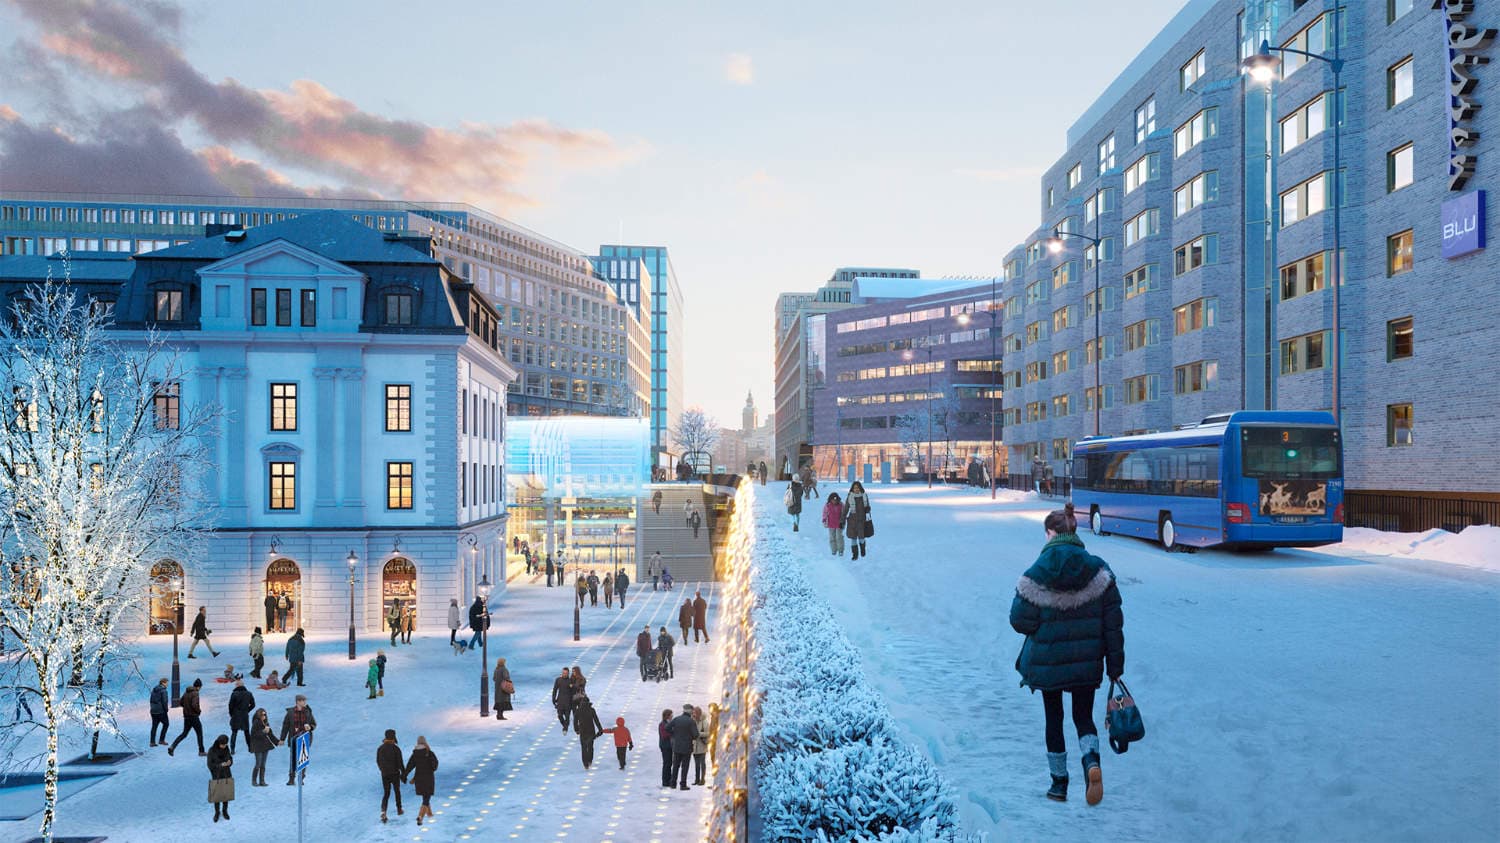 Foster + Partners led team wins Stockholm Central Station design competition